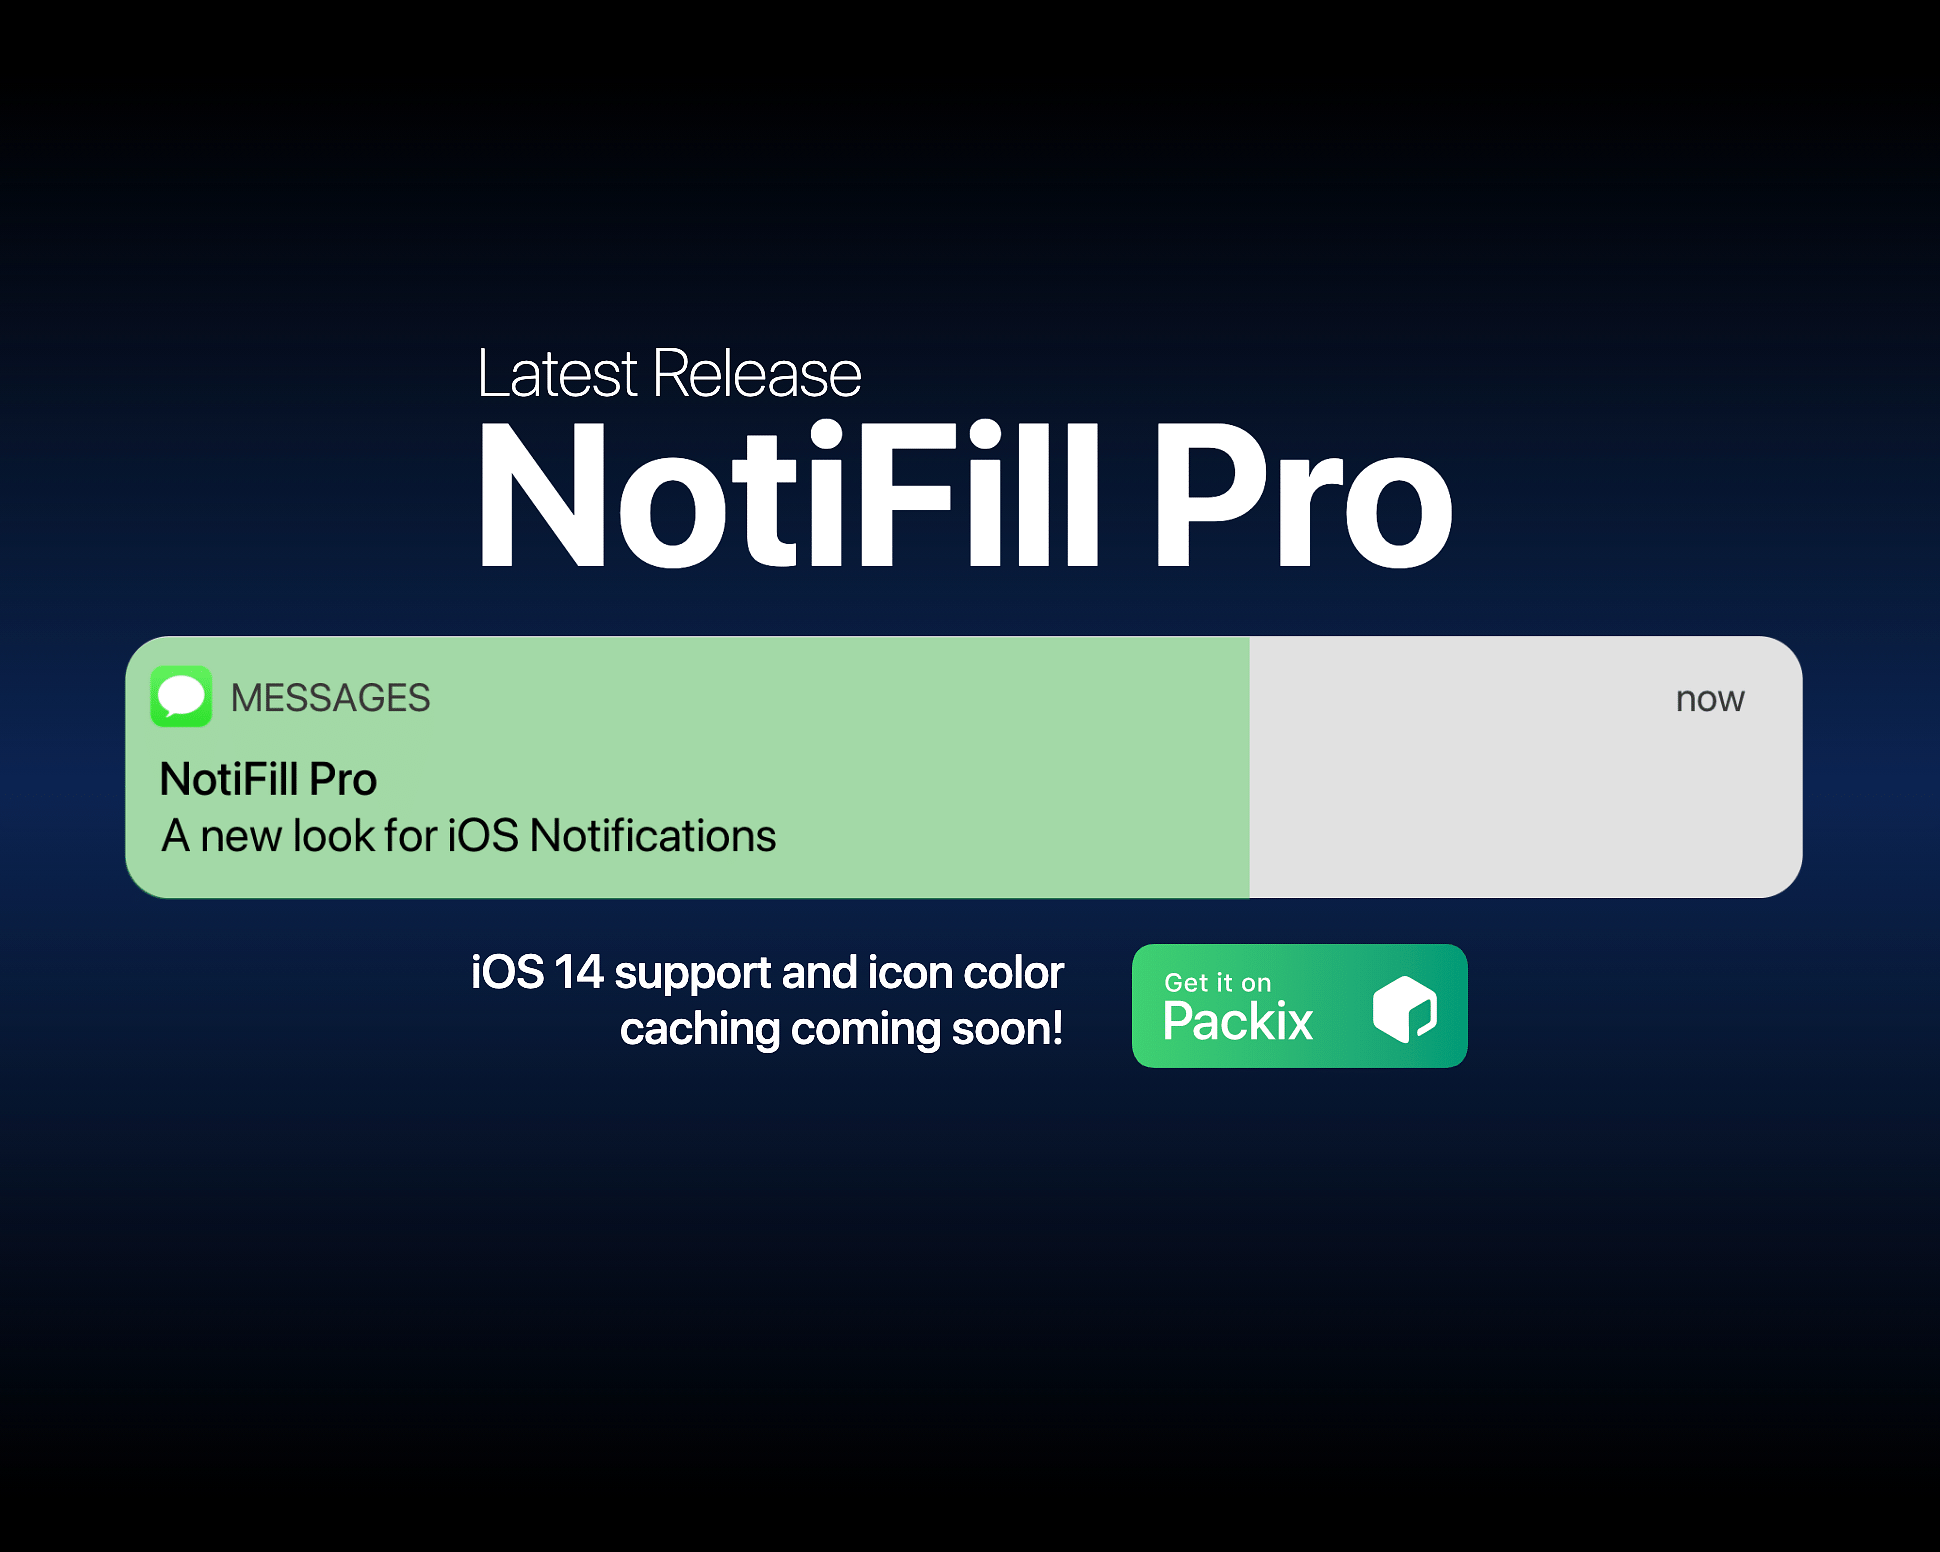 NotiFill Pro